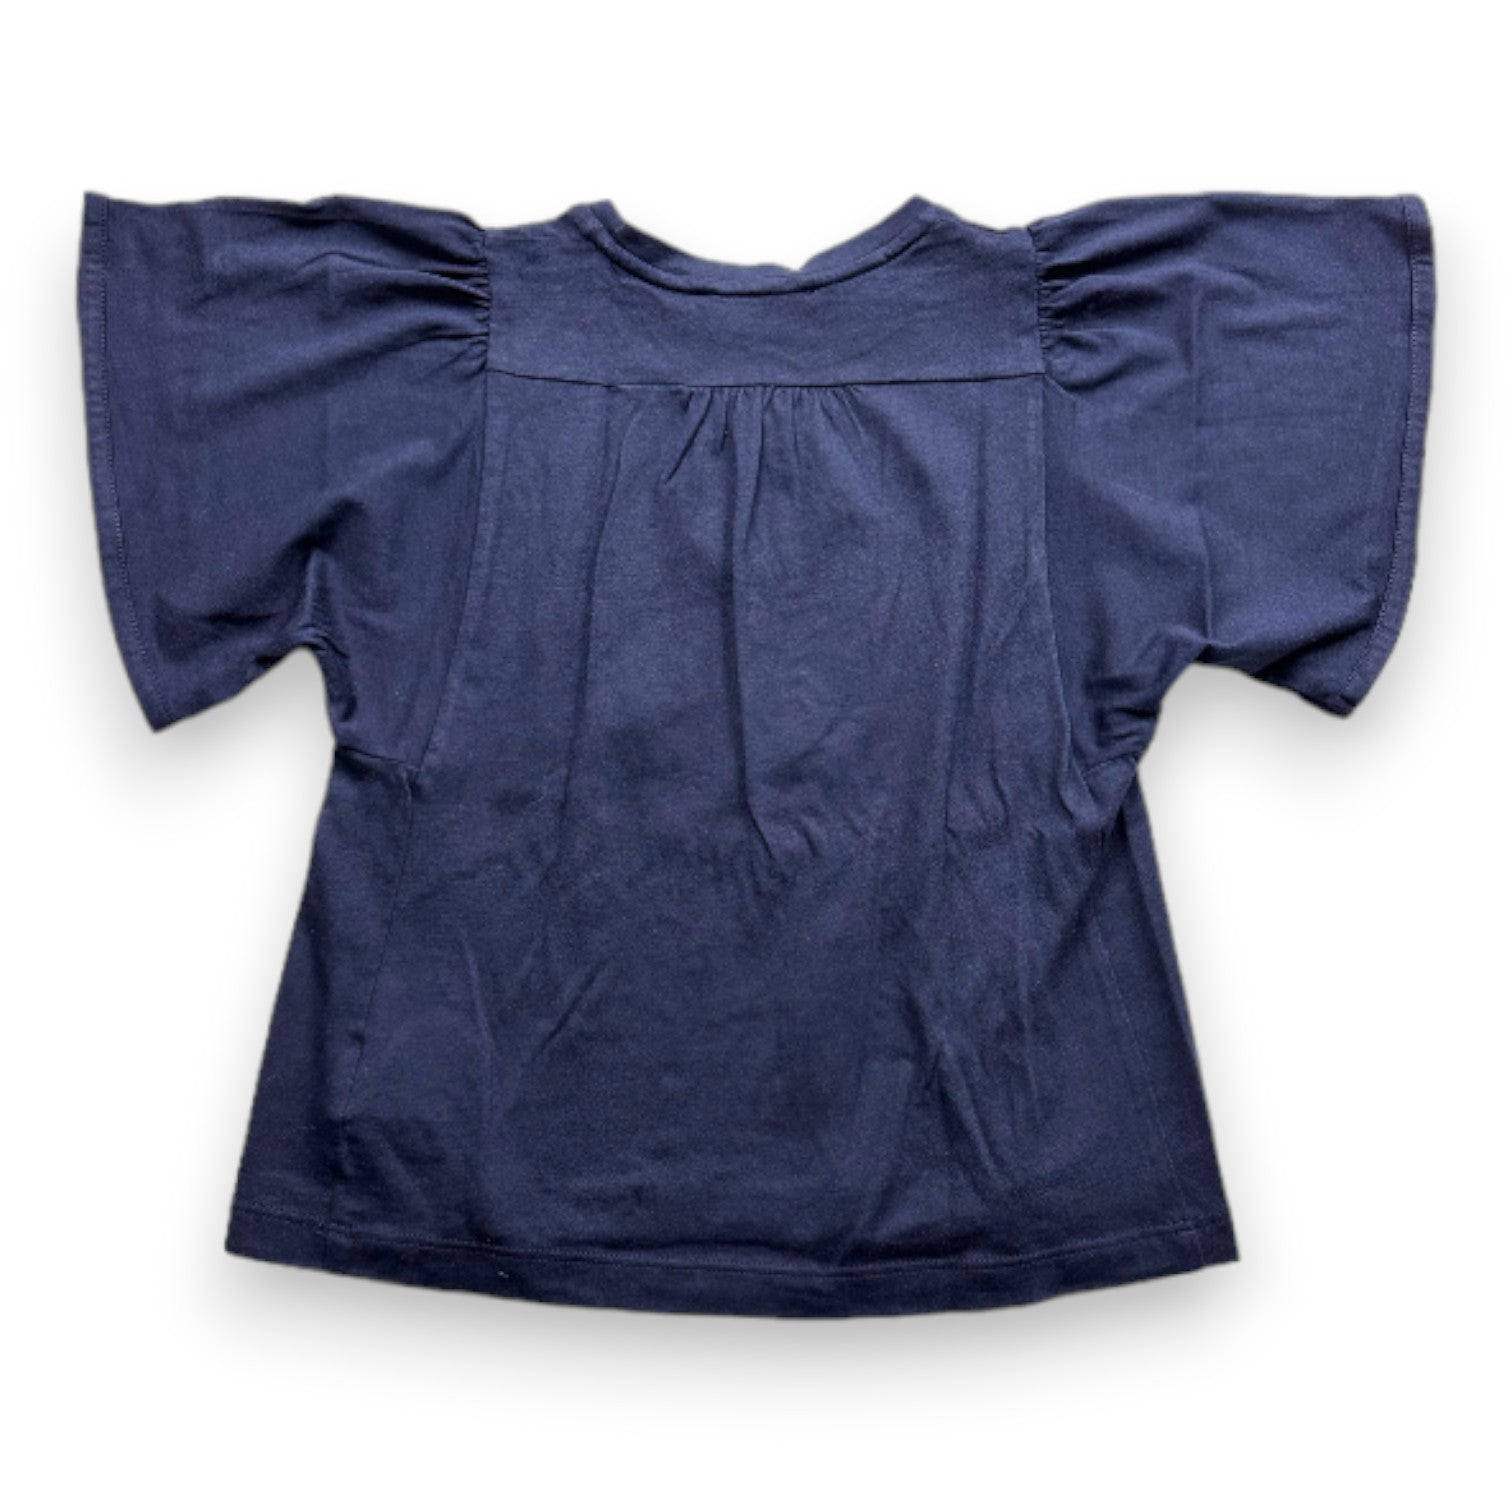 CHLOE - T-shirt bleu marine à manches courtes avec broderie neuf - 6 ans